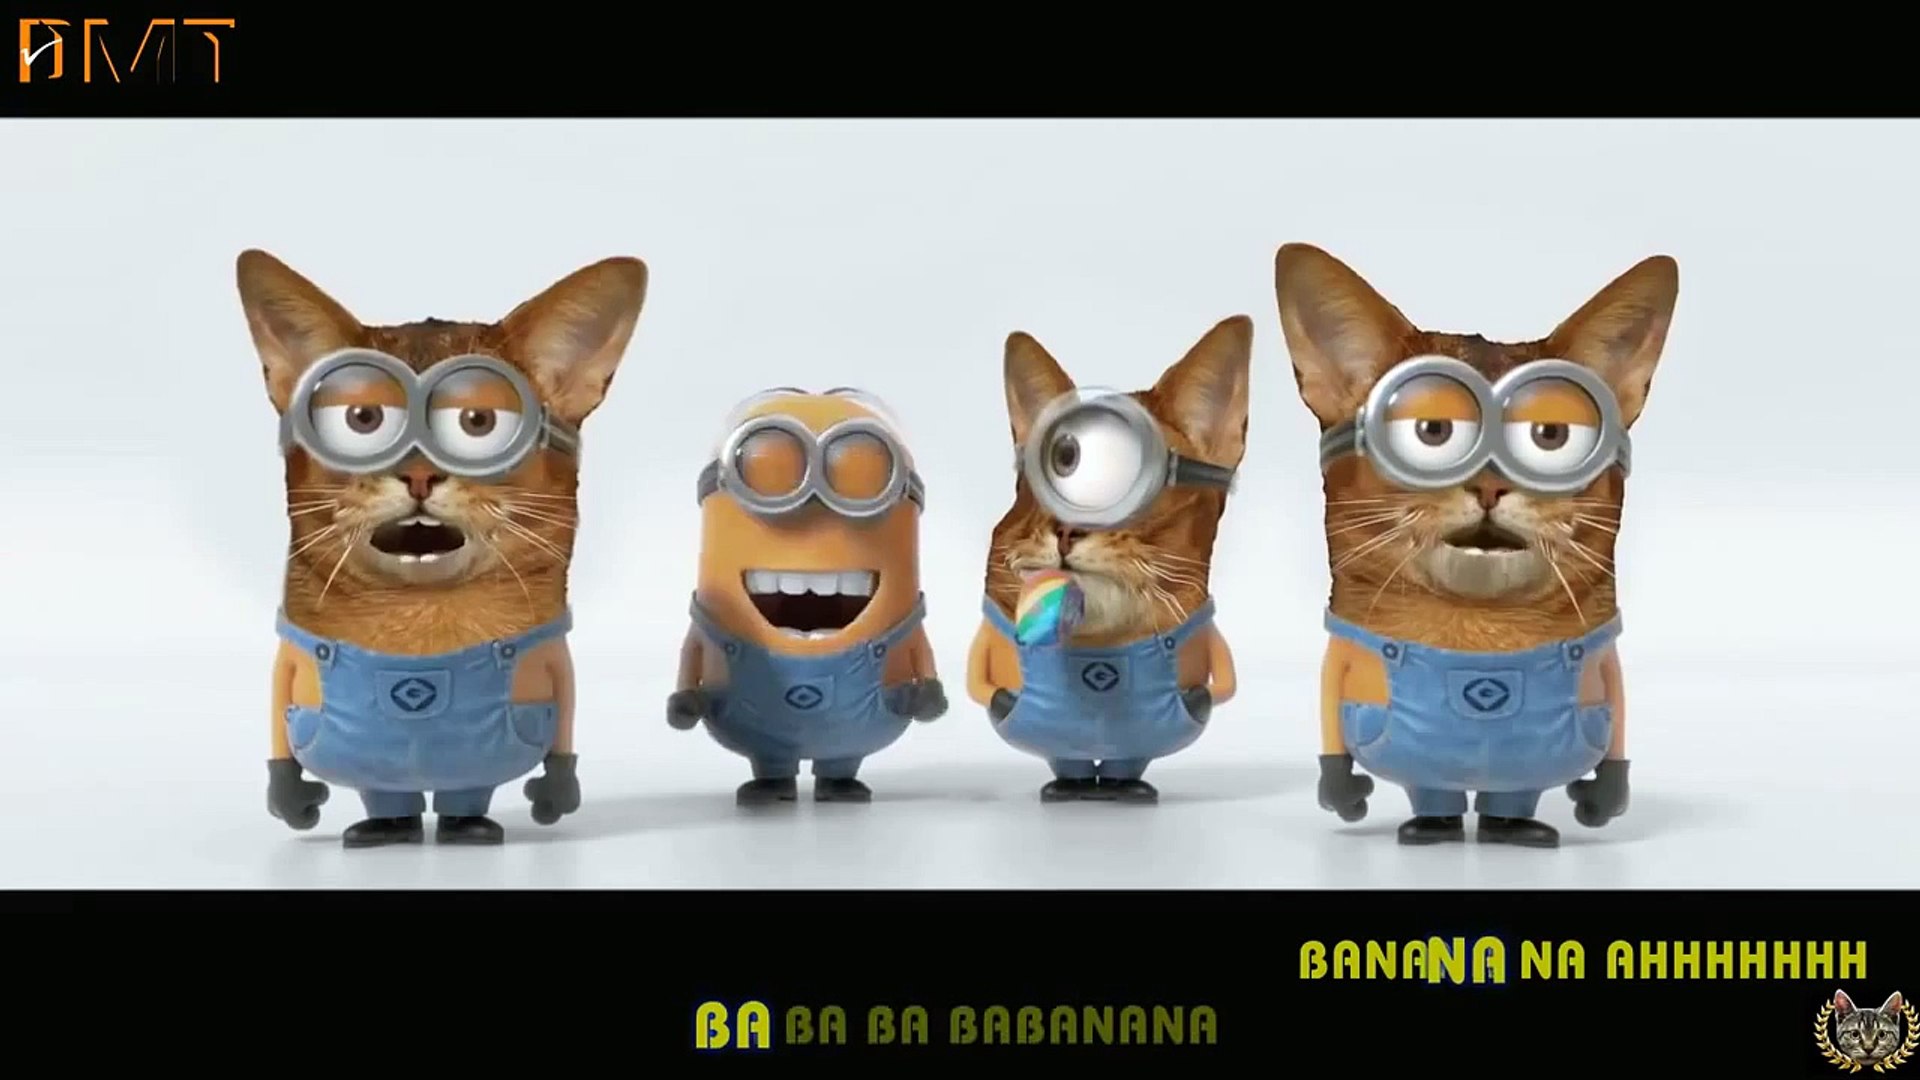 Engsub Despicable Me 2 Minions Banana Song Cats Version - video